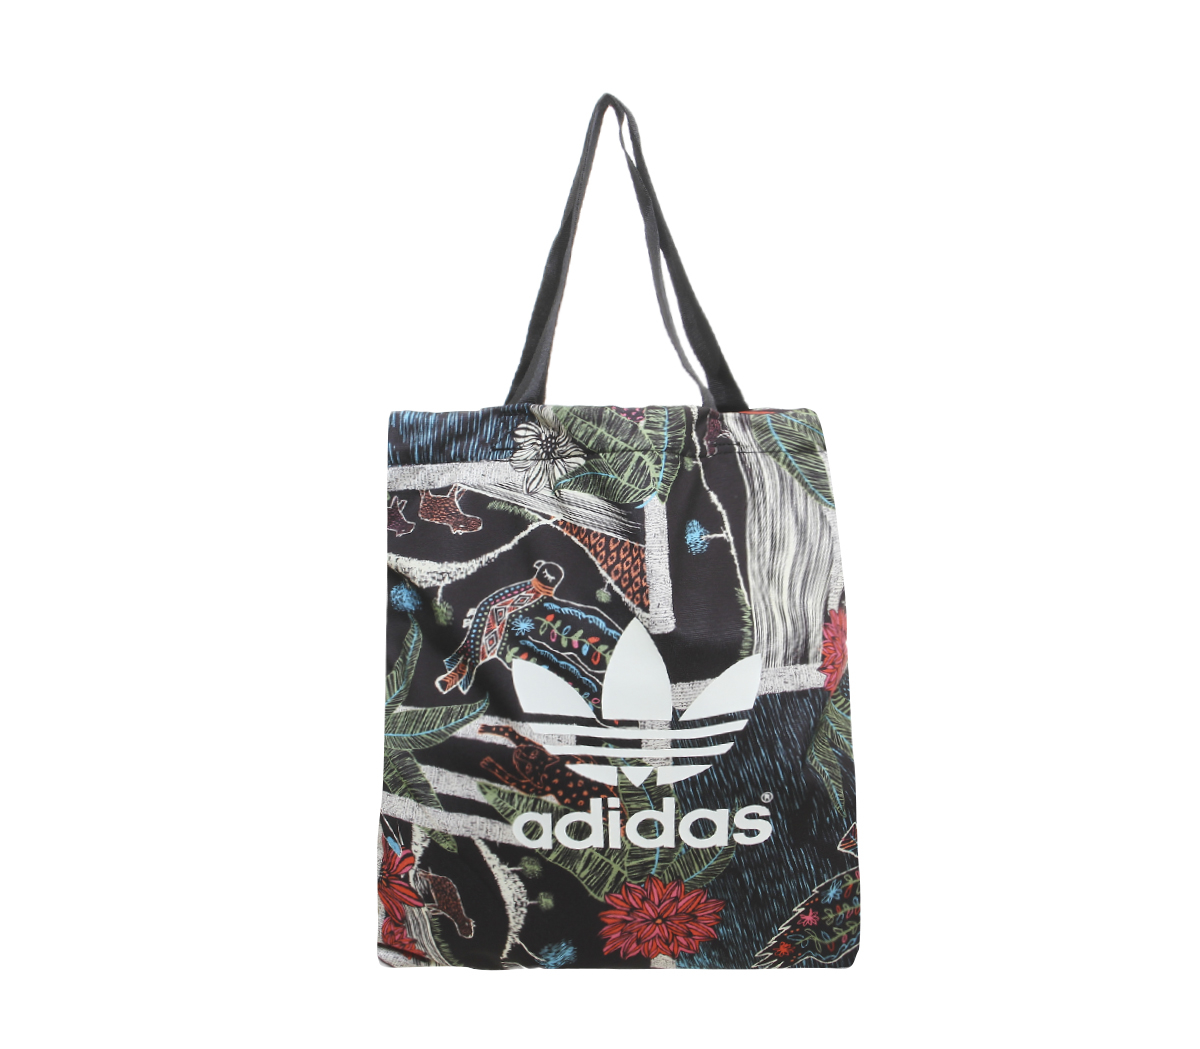 Buy > adidas shopper tote bag > in stock